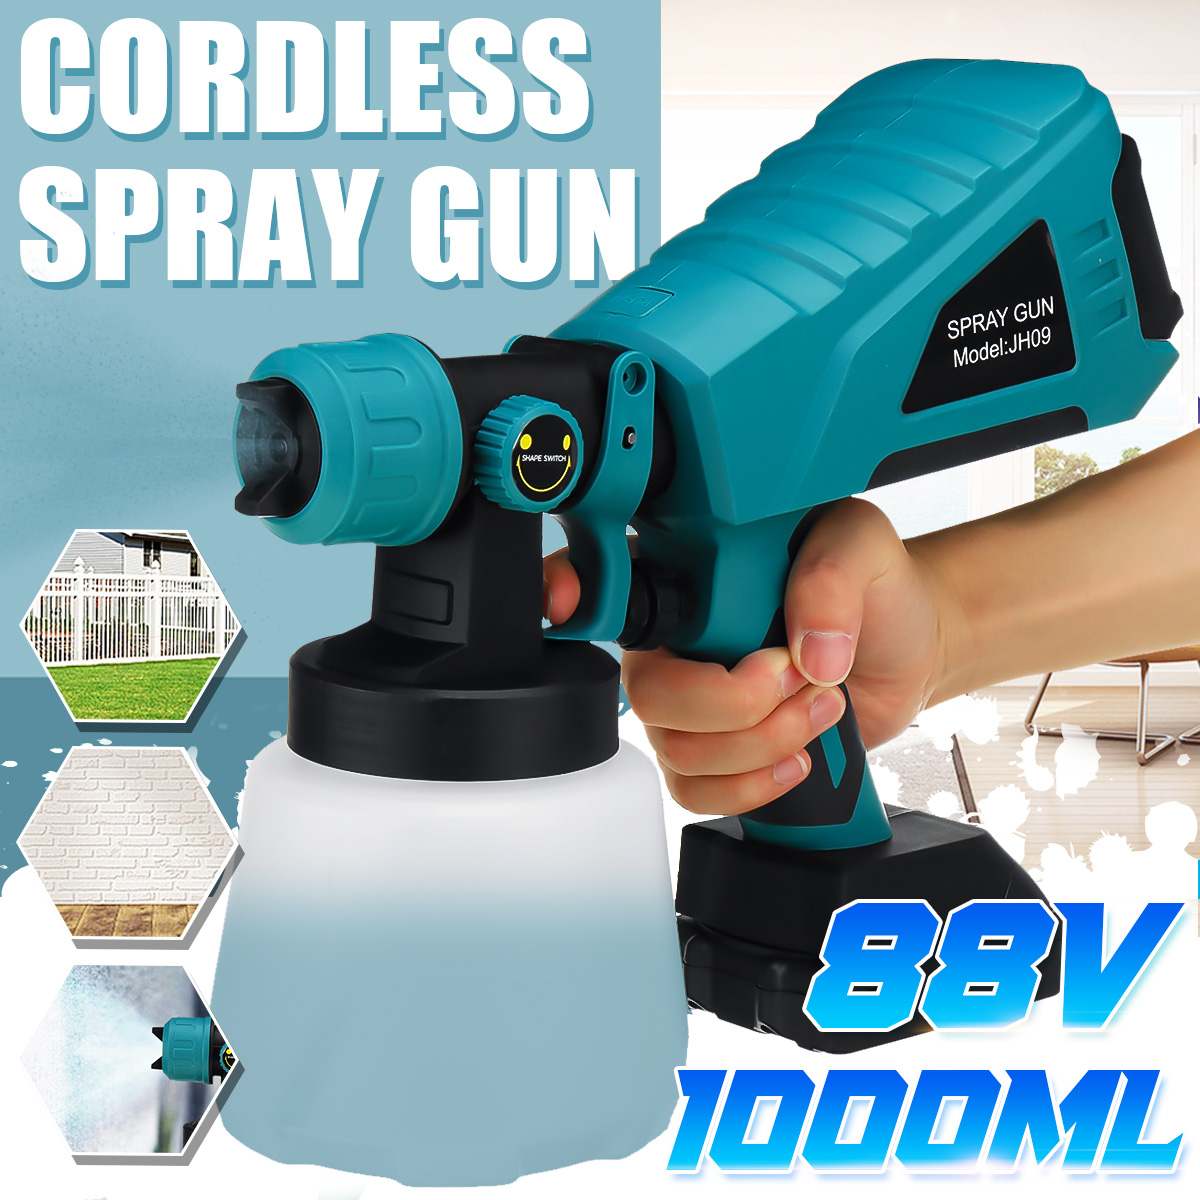 88VF-1000ML-Removable-Electric-Spray-Guns-Household-Convenience-Spray-Paint-W-Li-ion-Battery-For-Mak-1873507-3